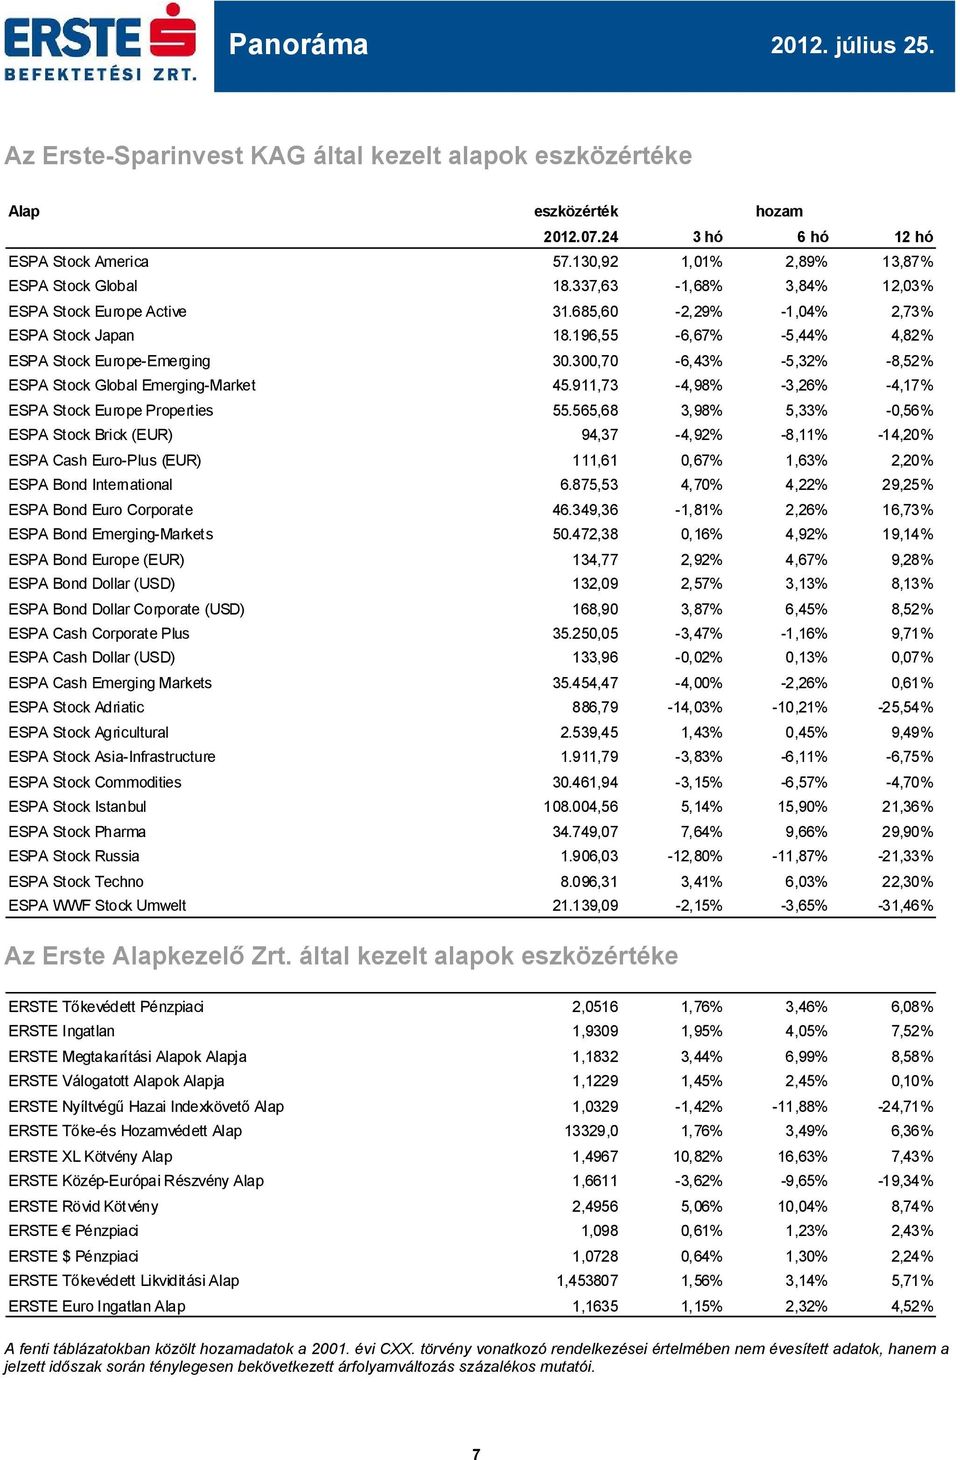 3,70-6,43% -5,32% -8,52% ESPA Stock Global Emerging-Market 45.911,73-4,98% -3,26% -4,17% ESPA Stock Europe Properties 55.